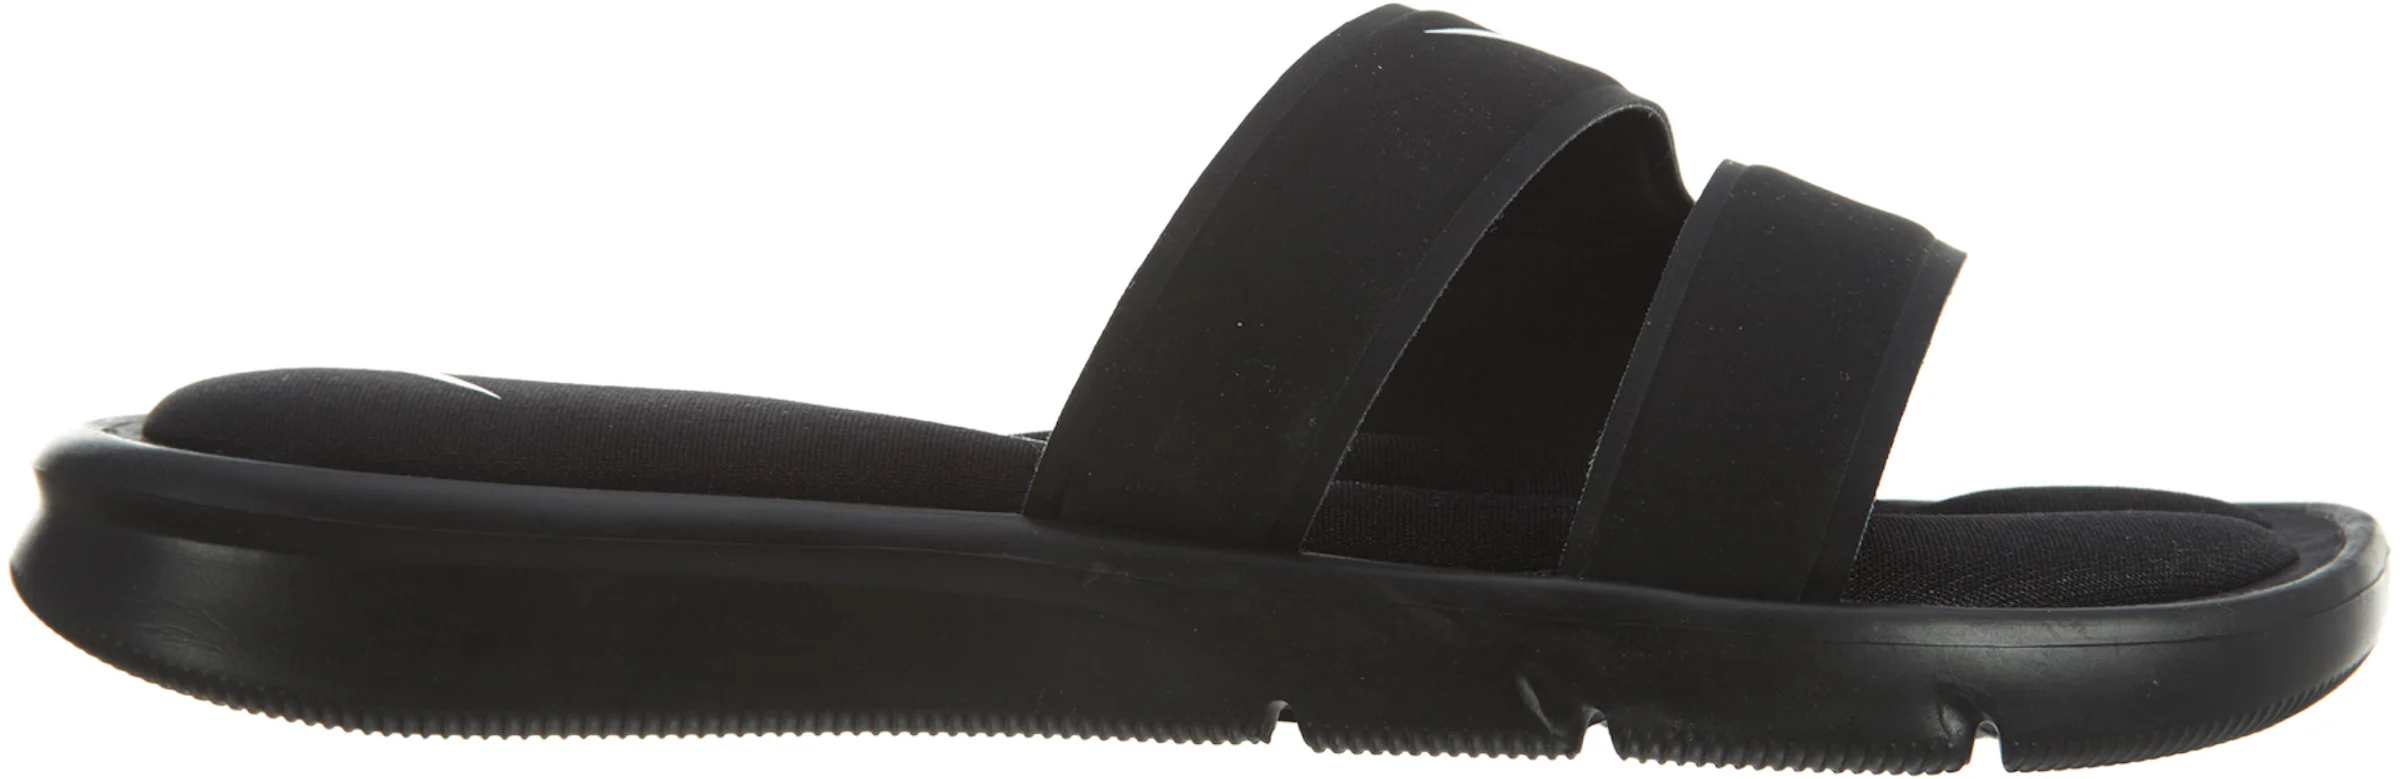 Nike Ultra Comfort Women's Flip Flop Sandals for sale